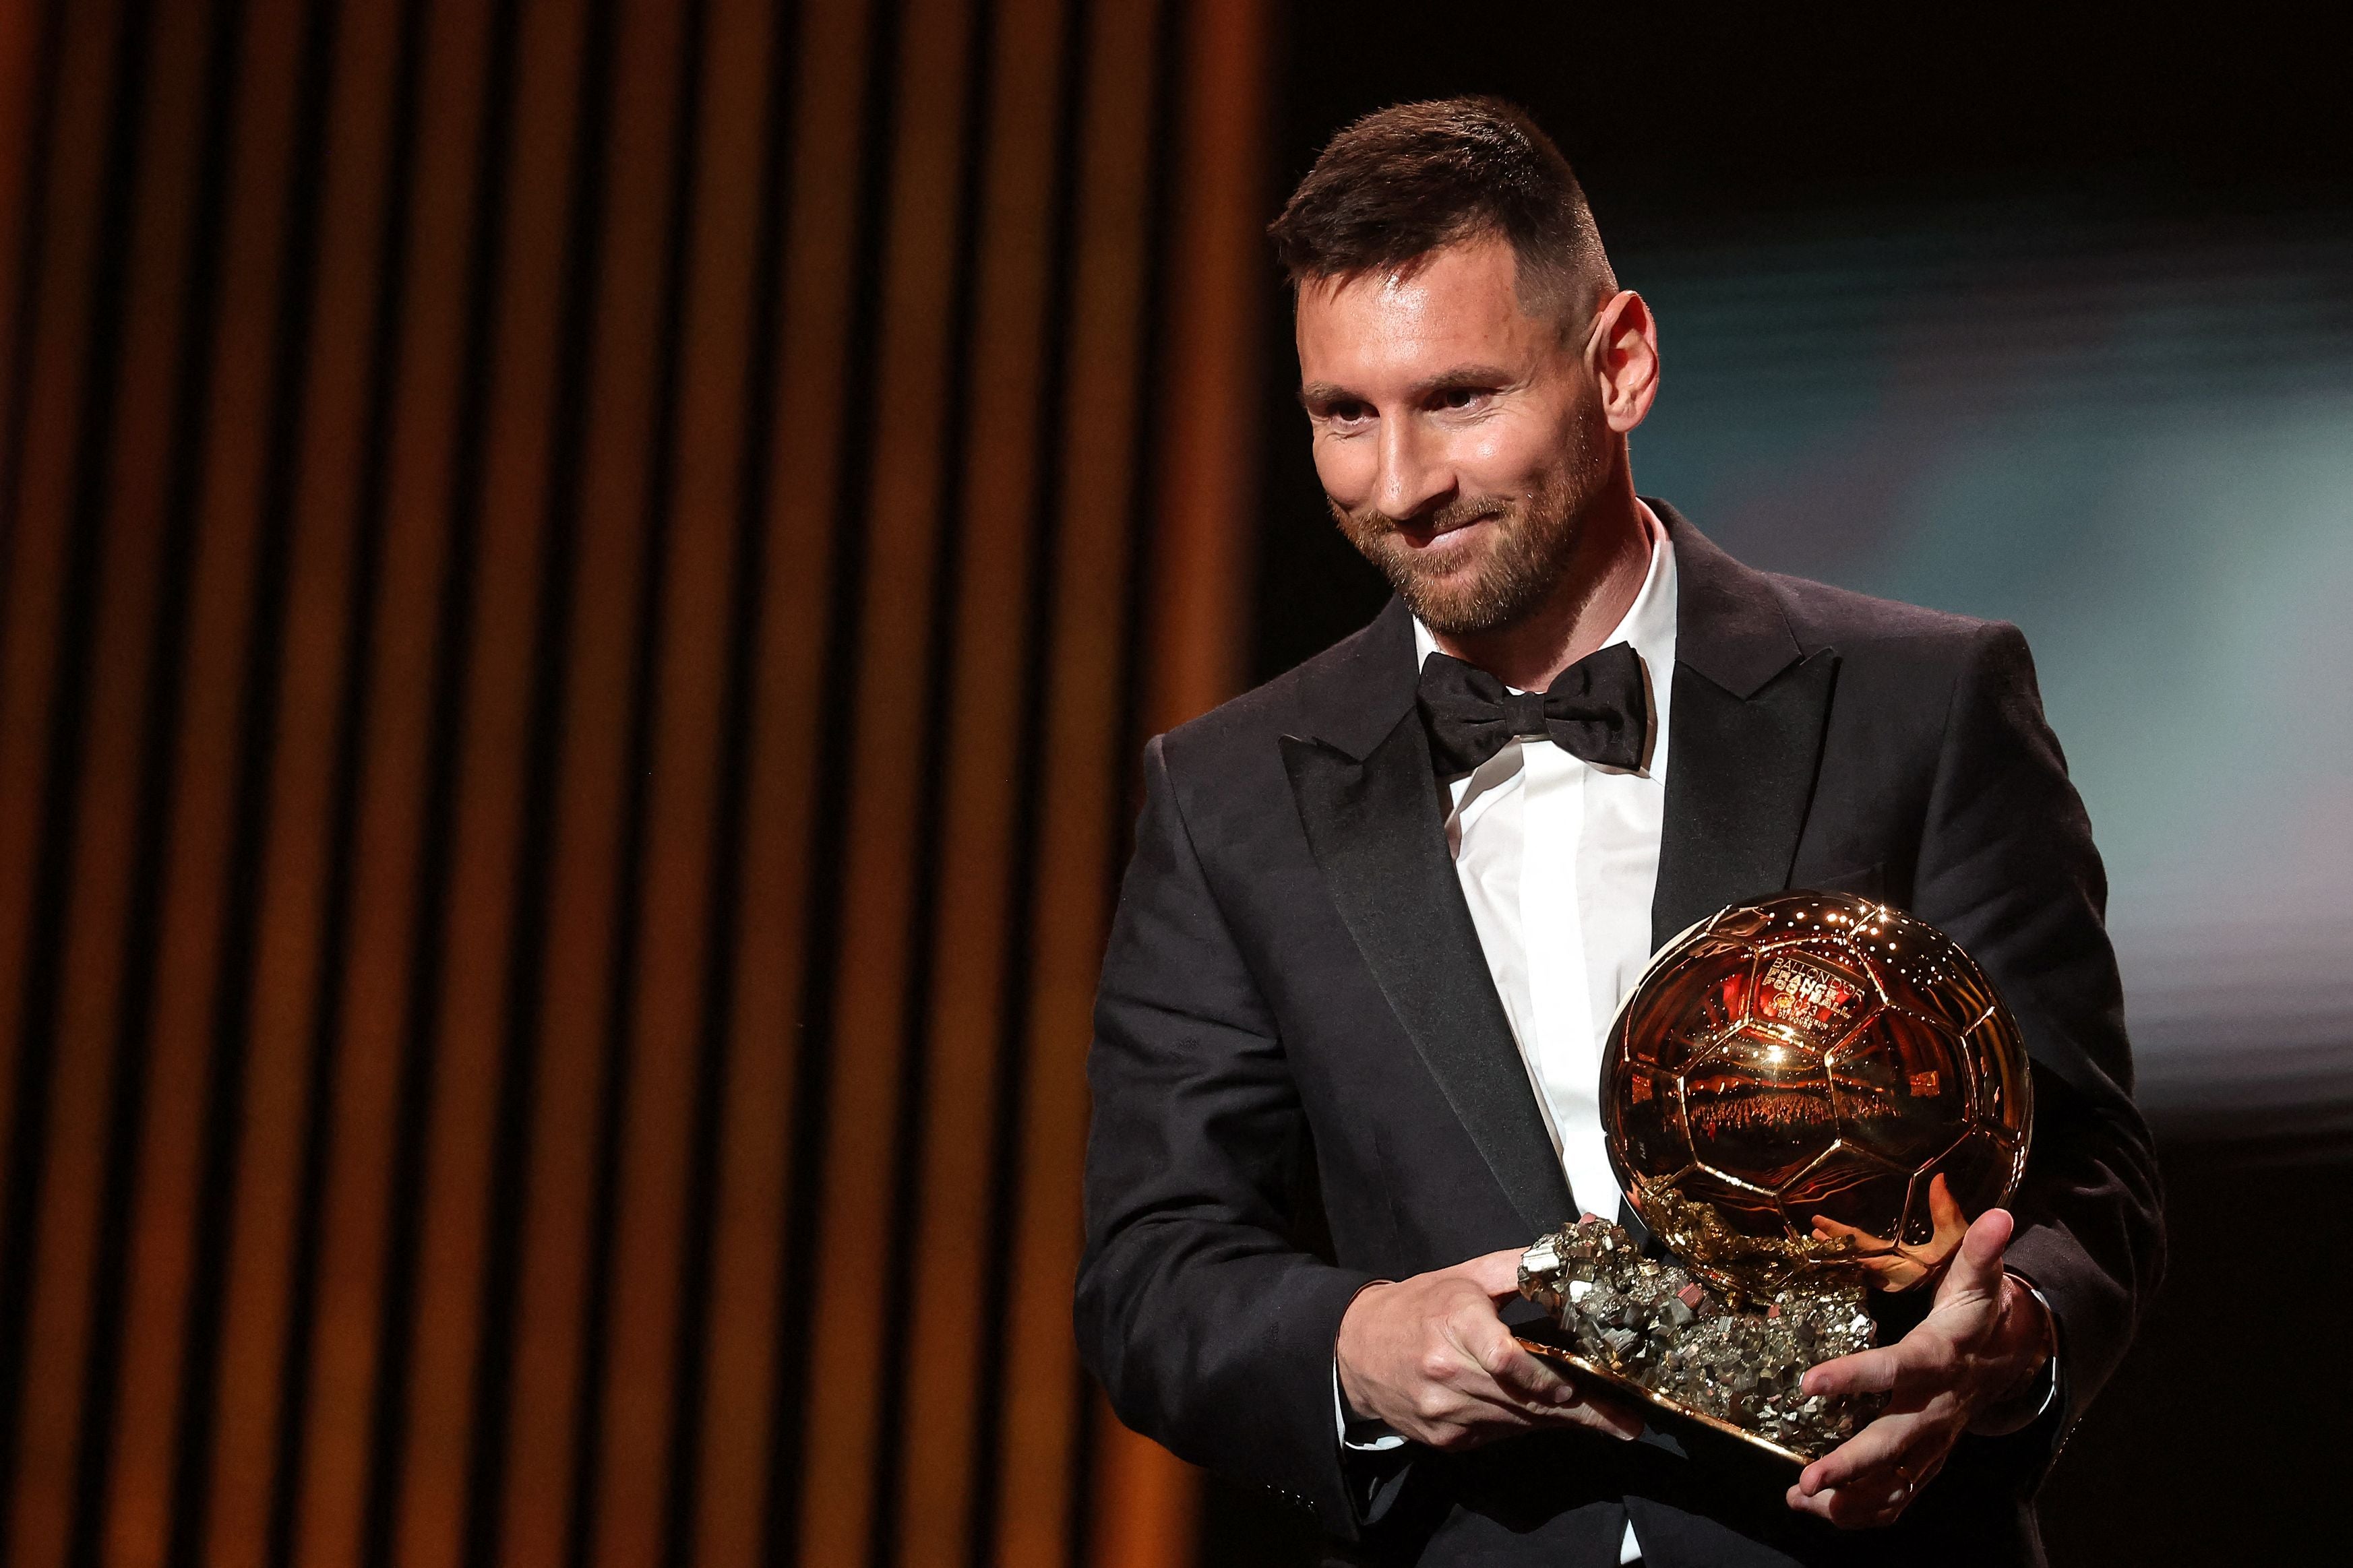 Ballon d'Or Awards LIVE: Latest updates as Lionel Messi crowned and Aitana  Bonmati wins Feminin award